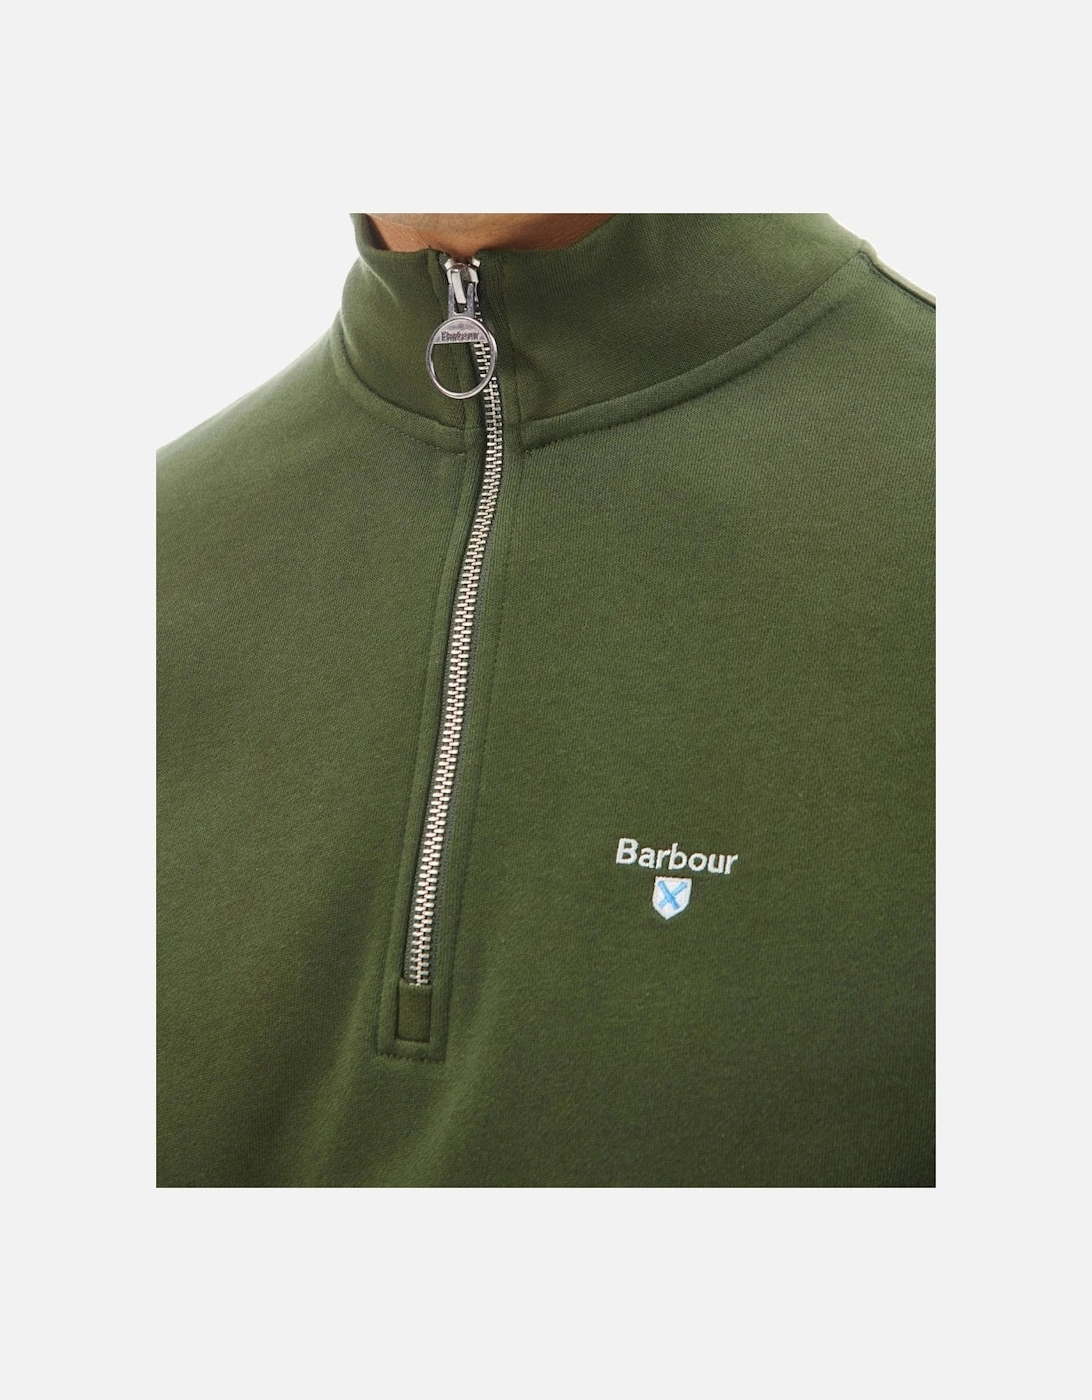 Rothley Mens Half-Zip Sweatshirt